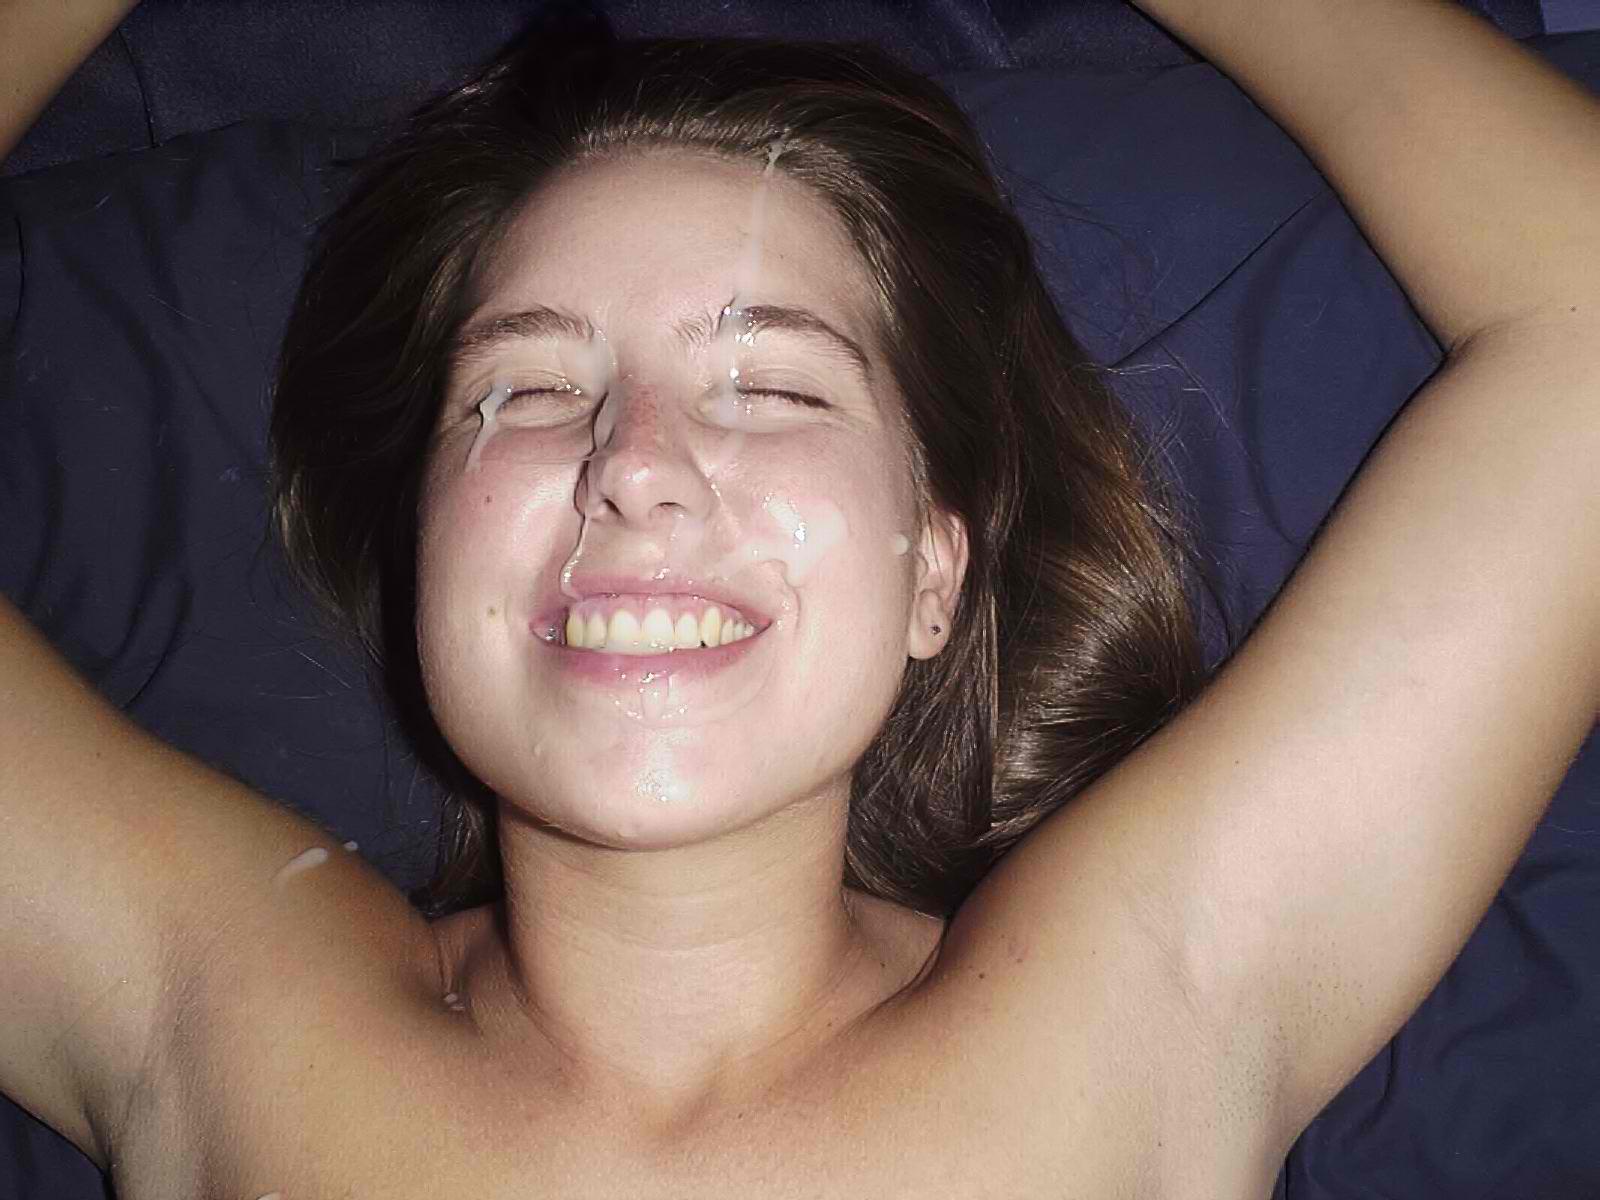 Homemade Cum Faced - Candid girl cum face - Porn archive